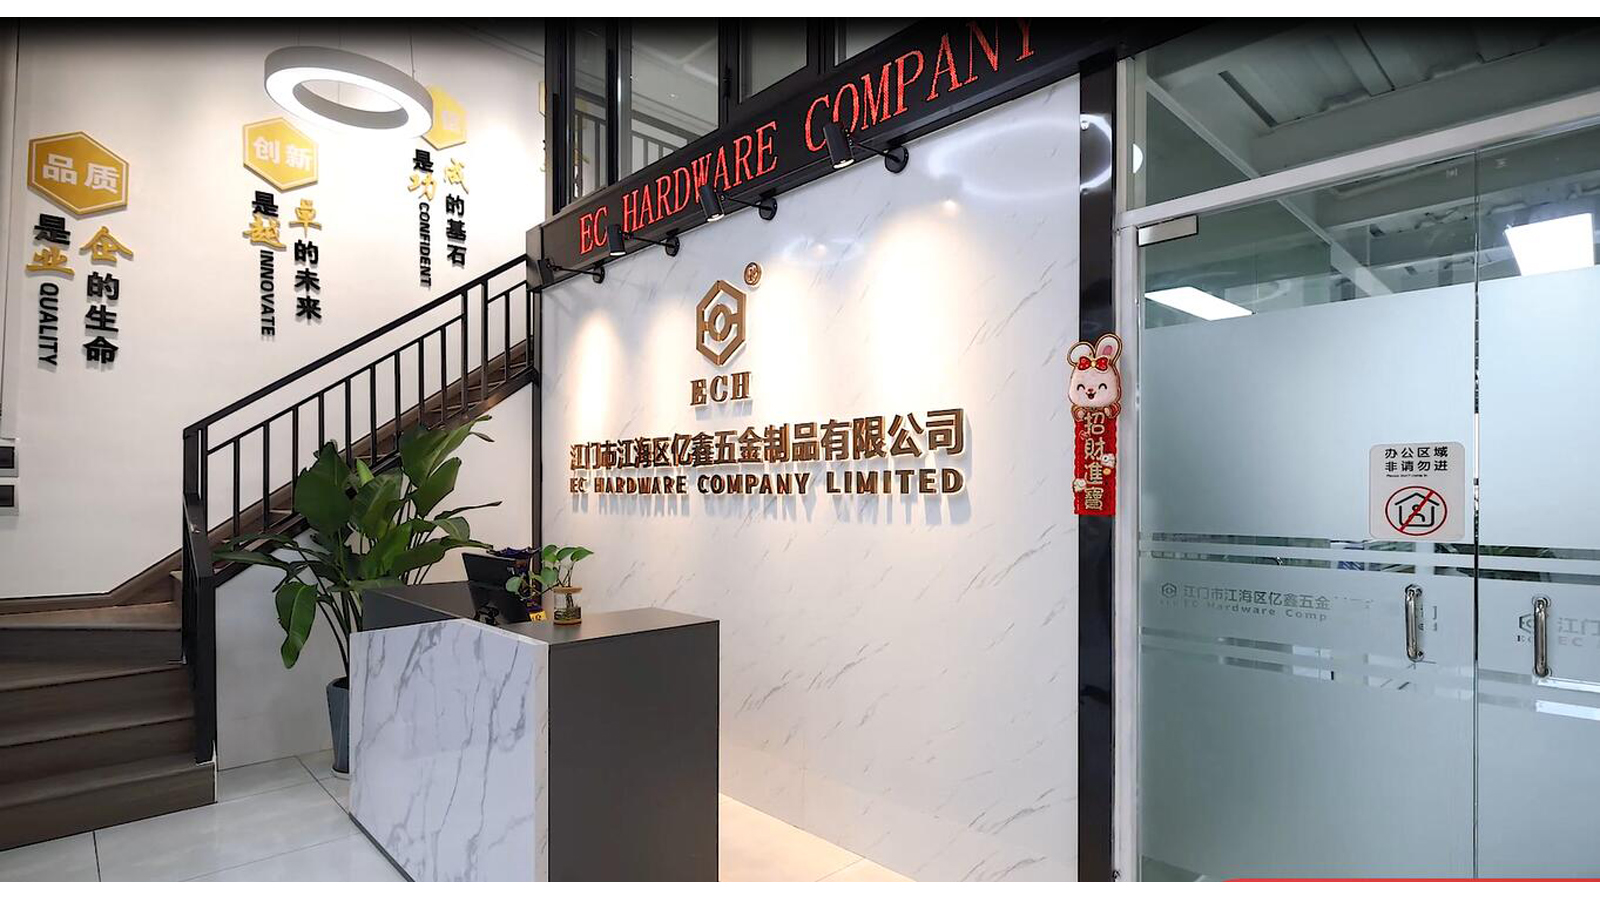 Nueva Oficina EC Hardware Company Ltd